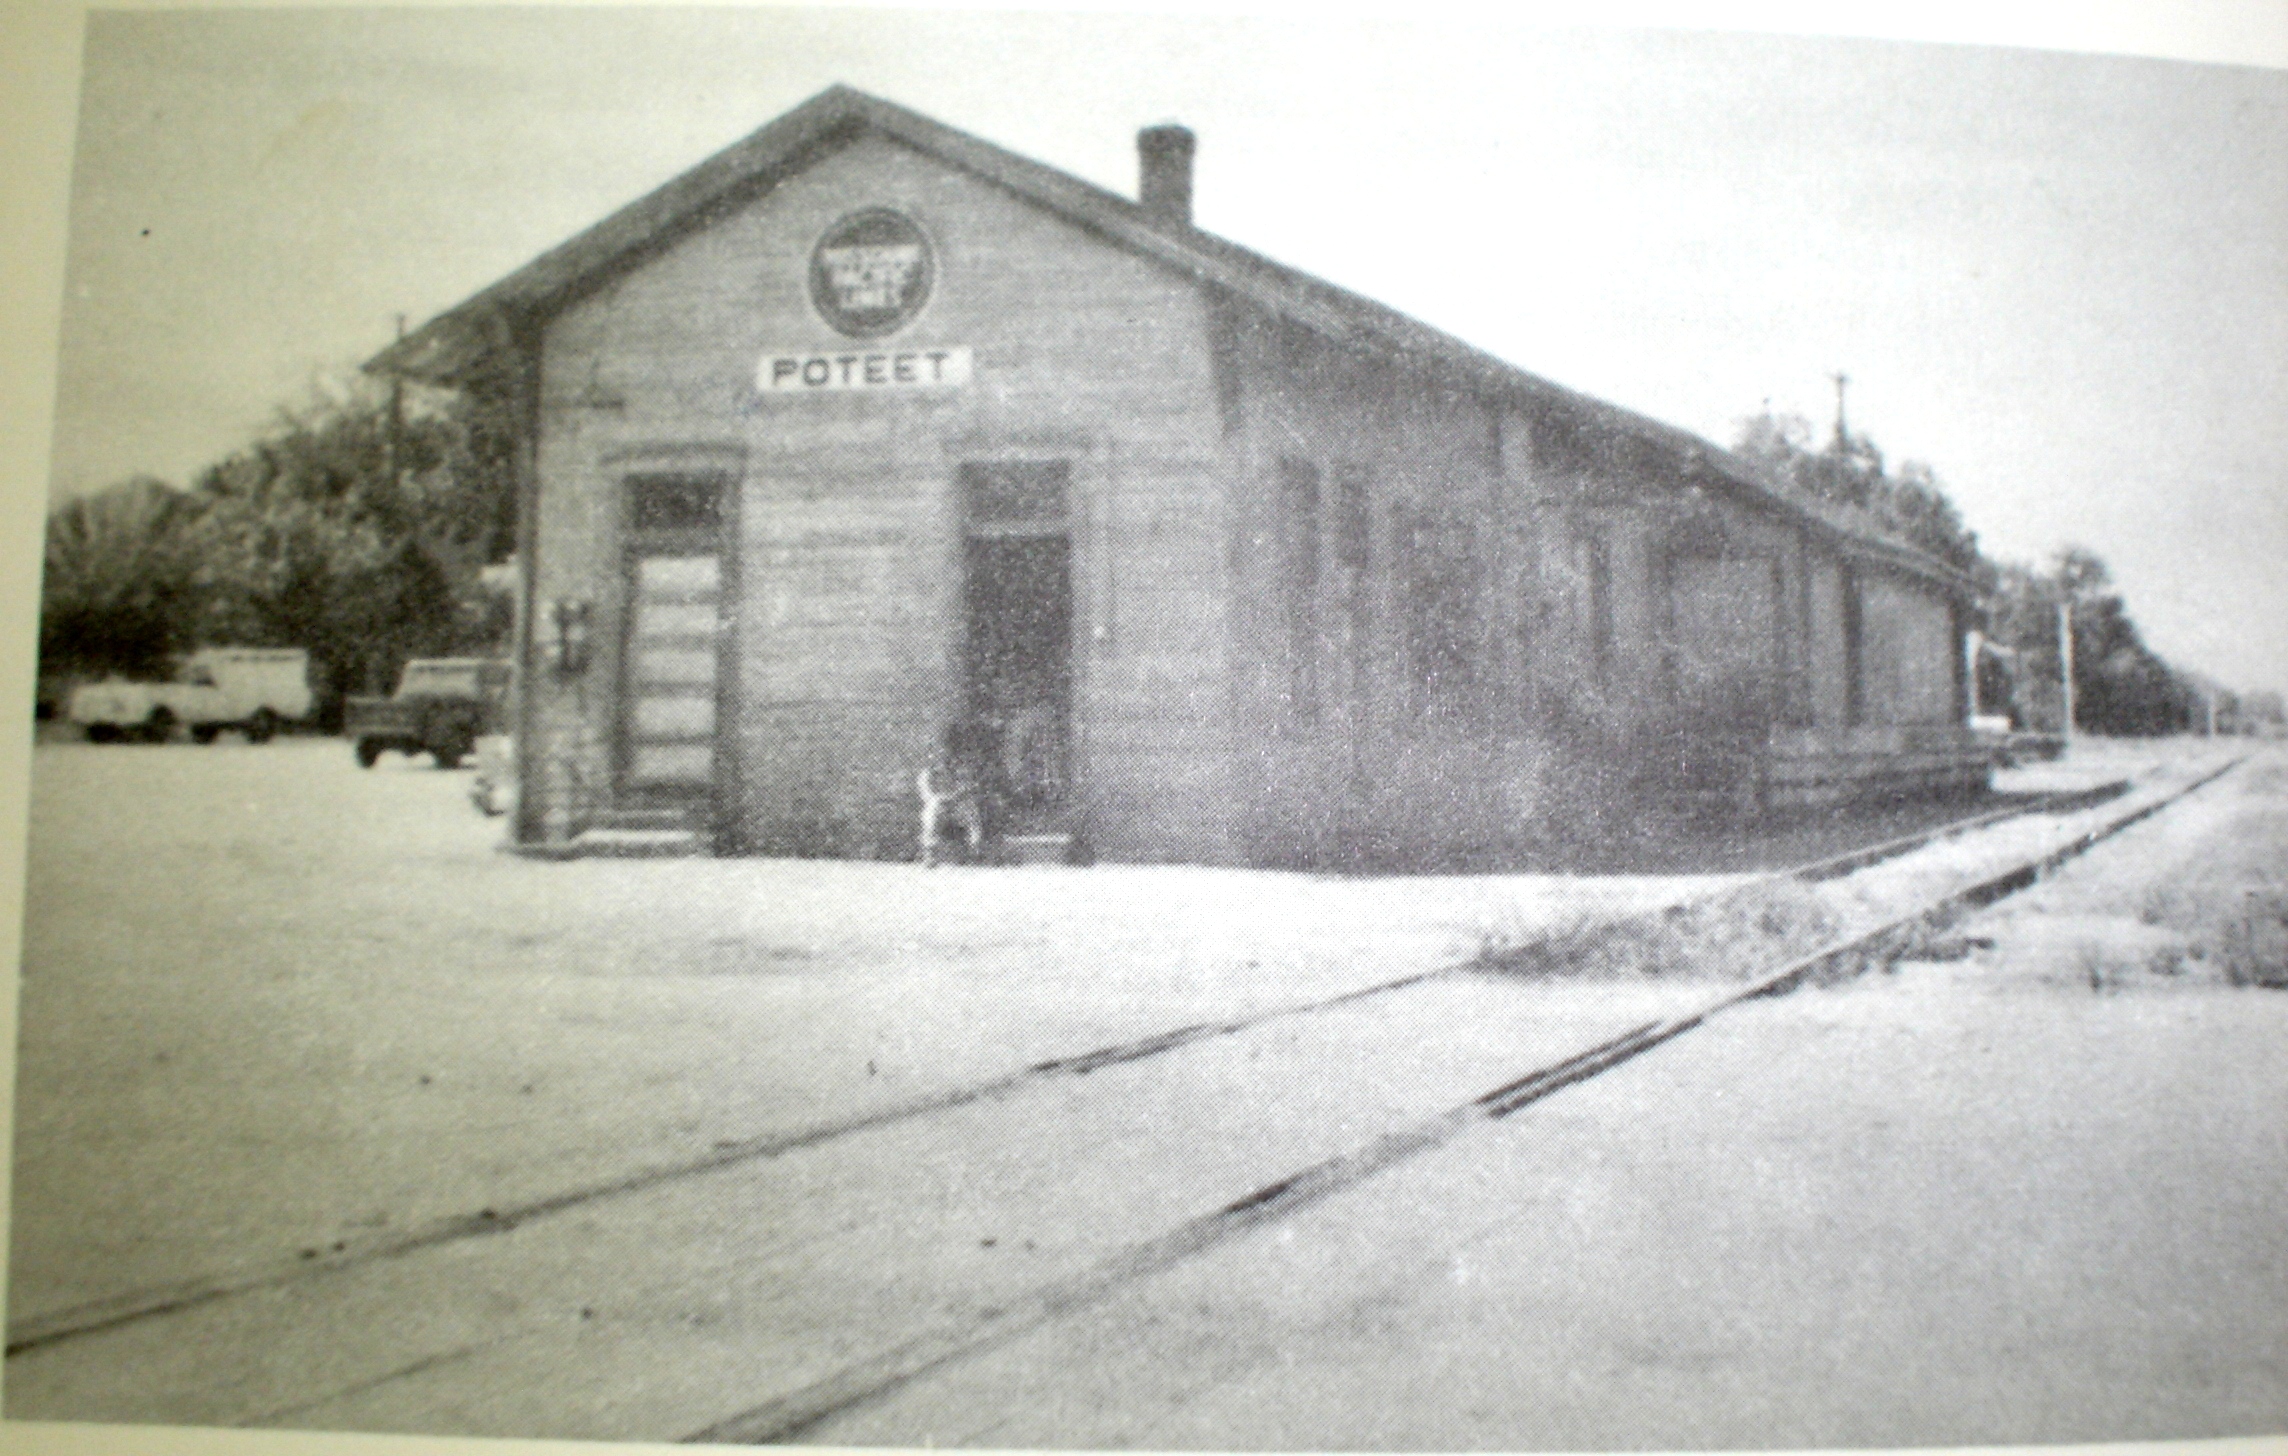 Poteet Railroad Station